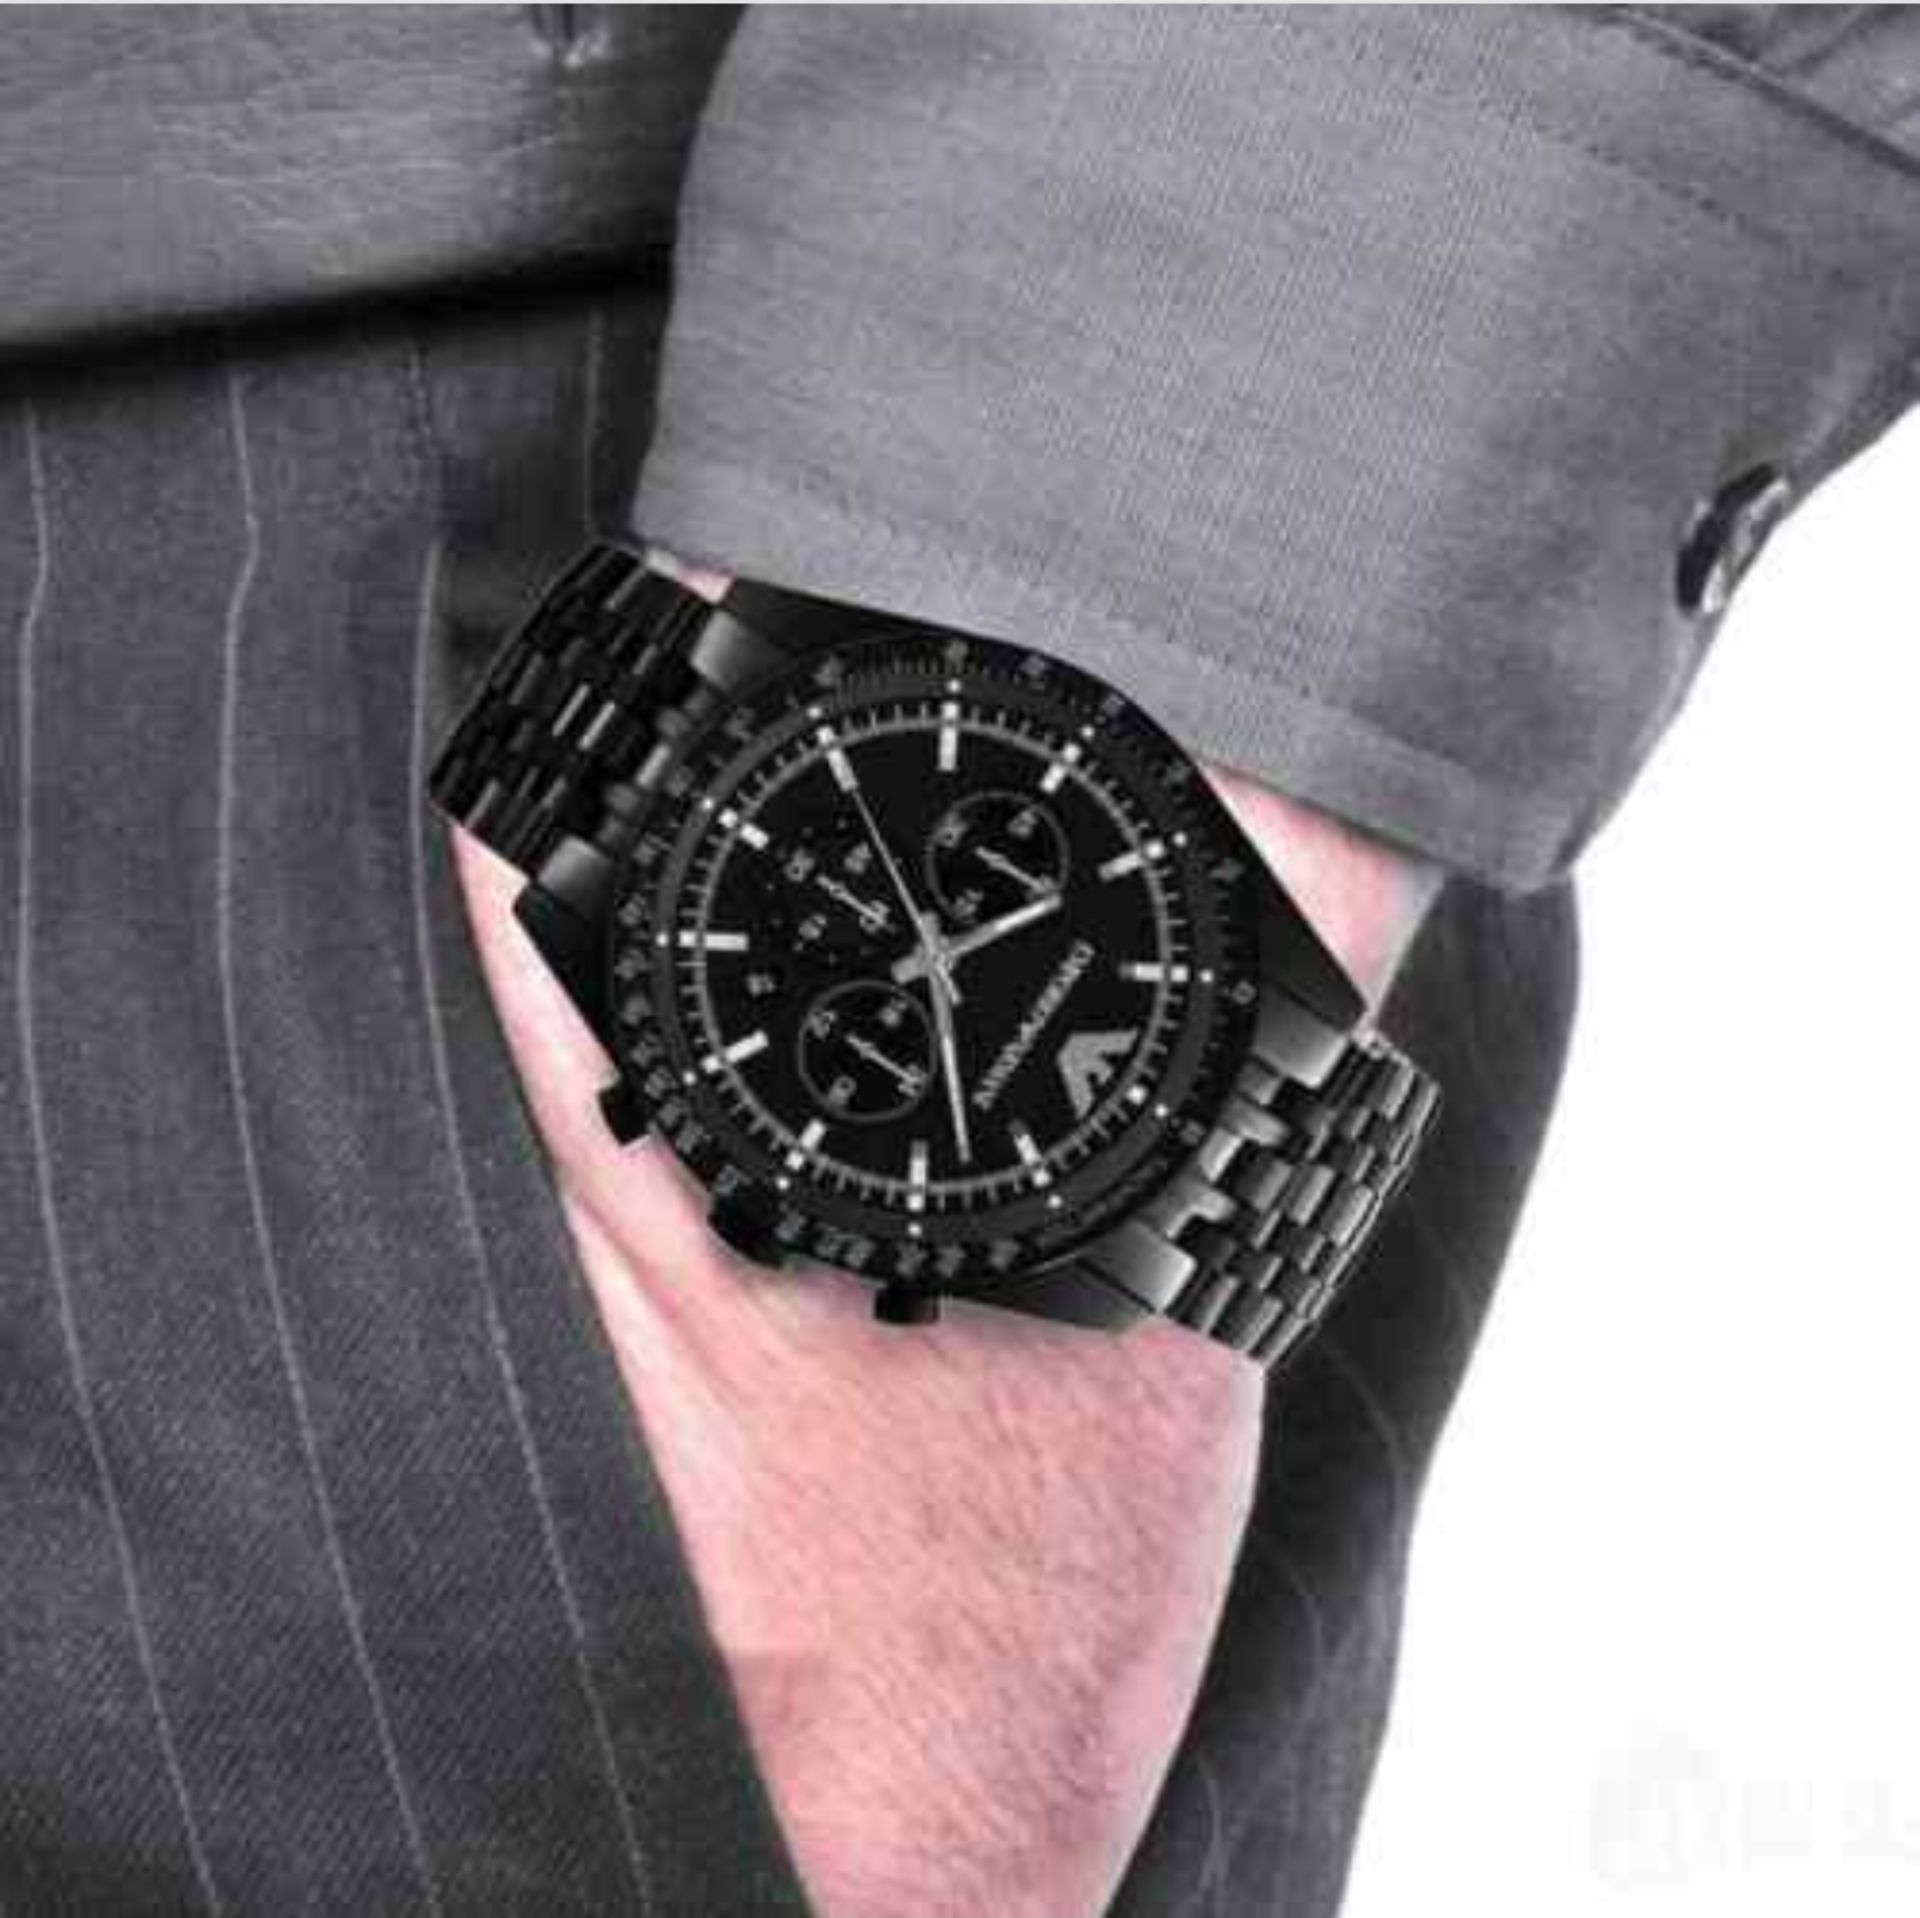 Emporio Armani AR5989 Men's Tazio Black Stainless Steel Bracelet Chronograph Watch - Image 5 of 9